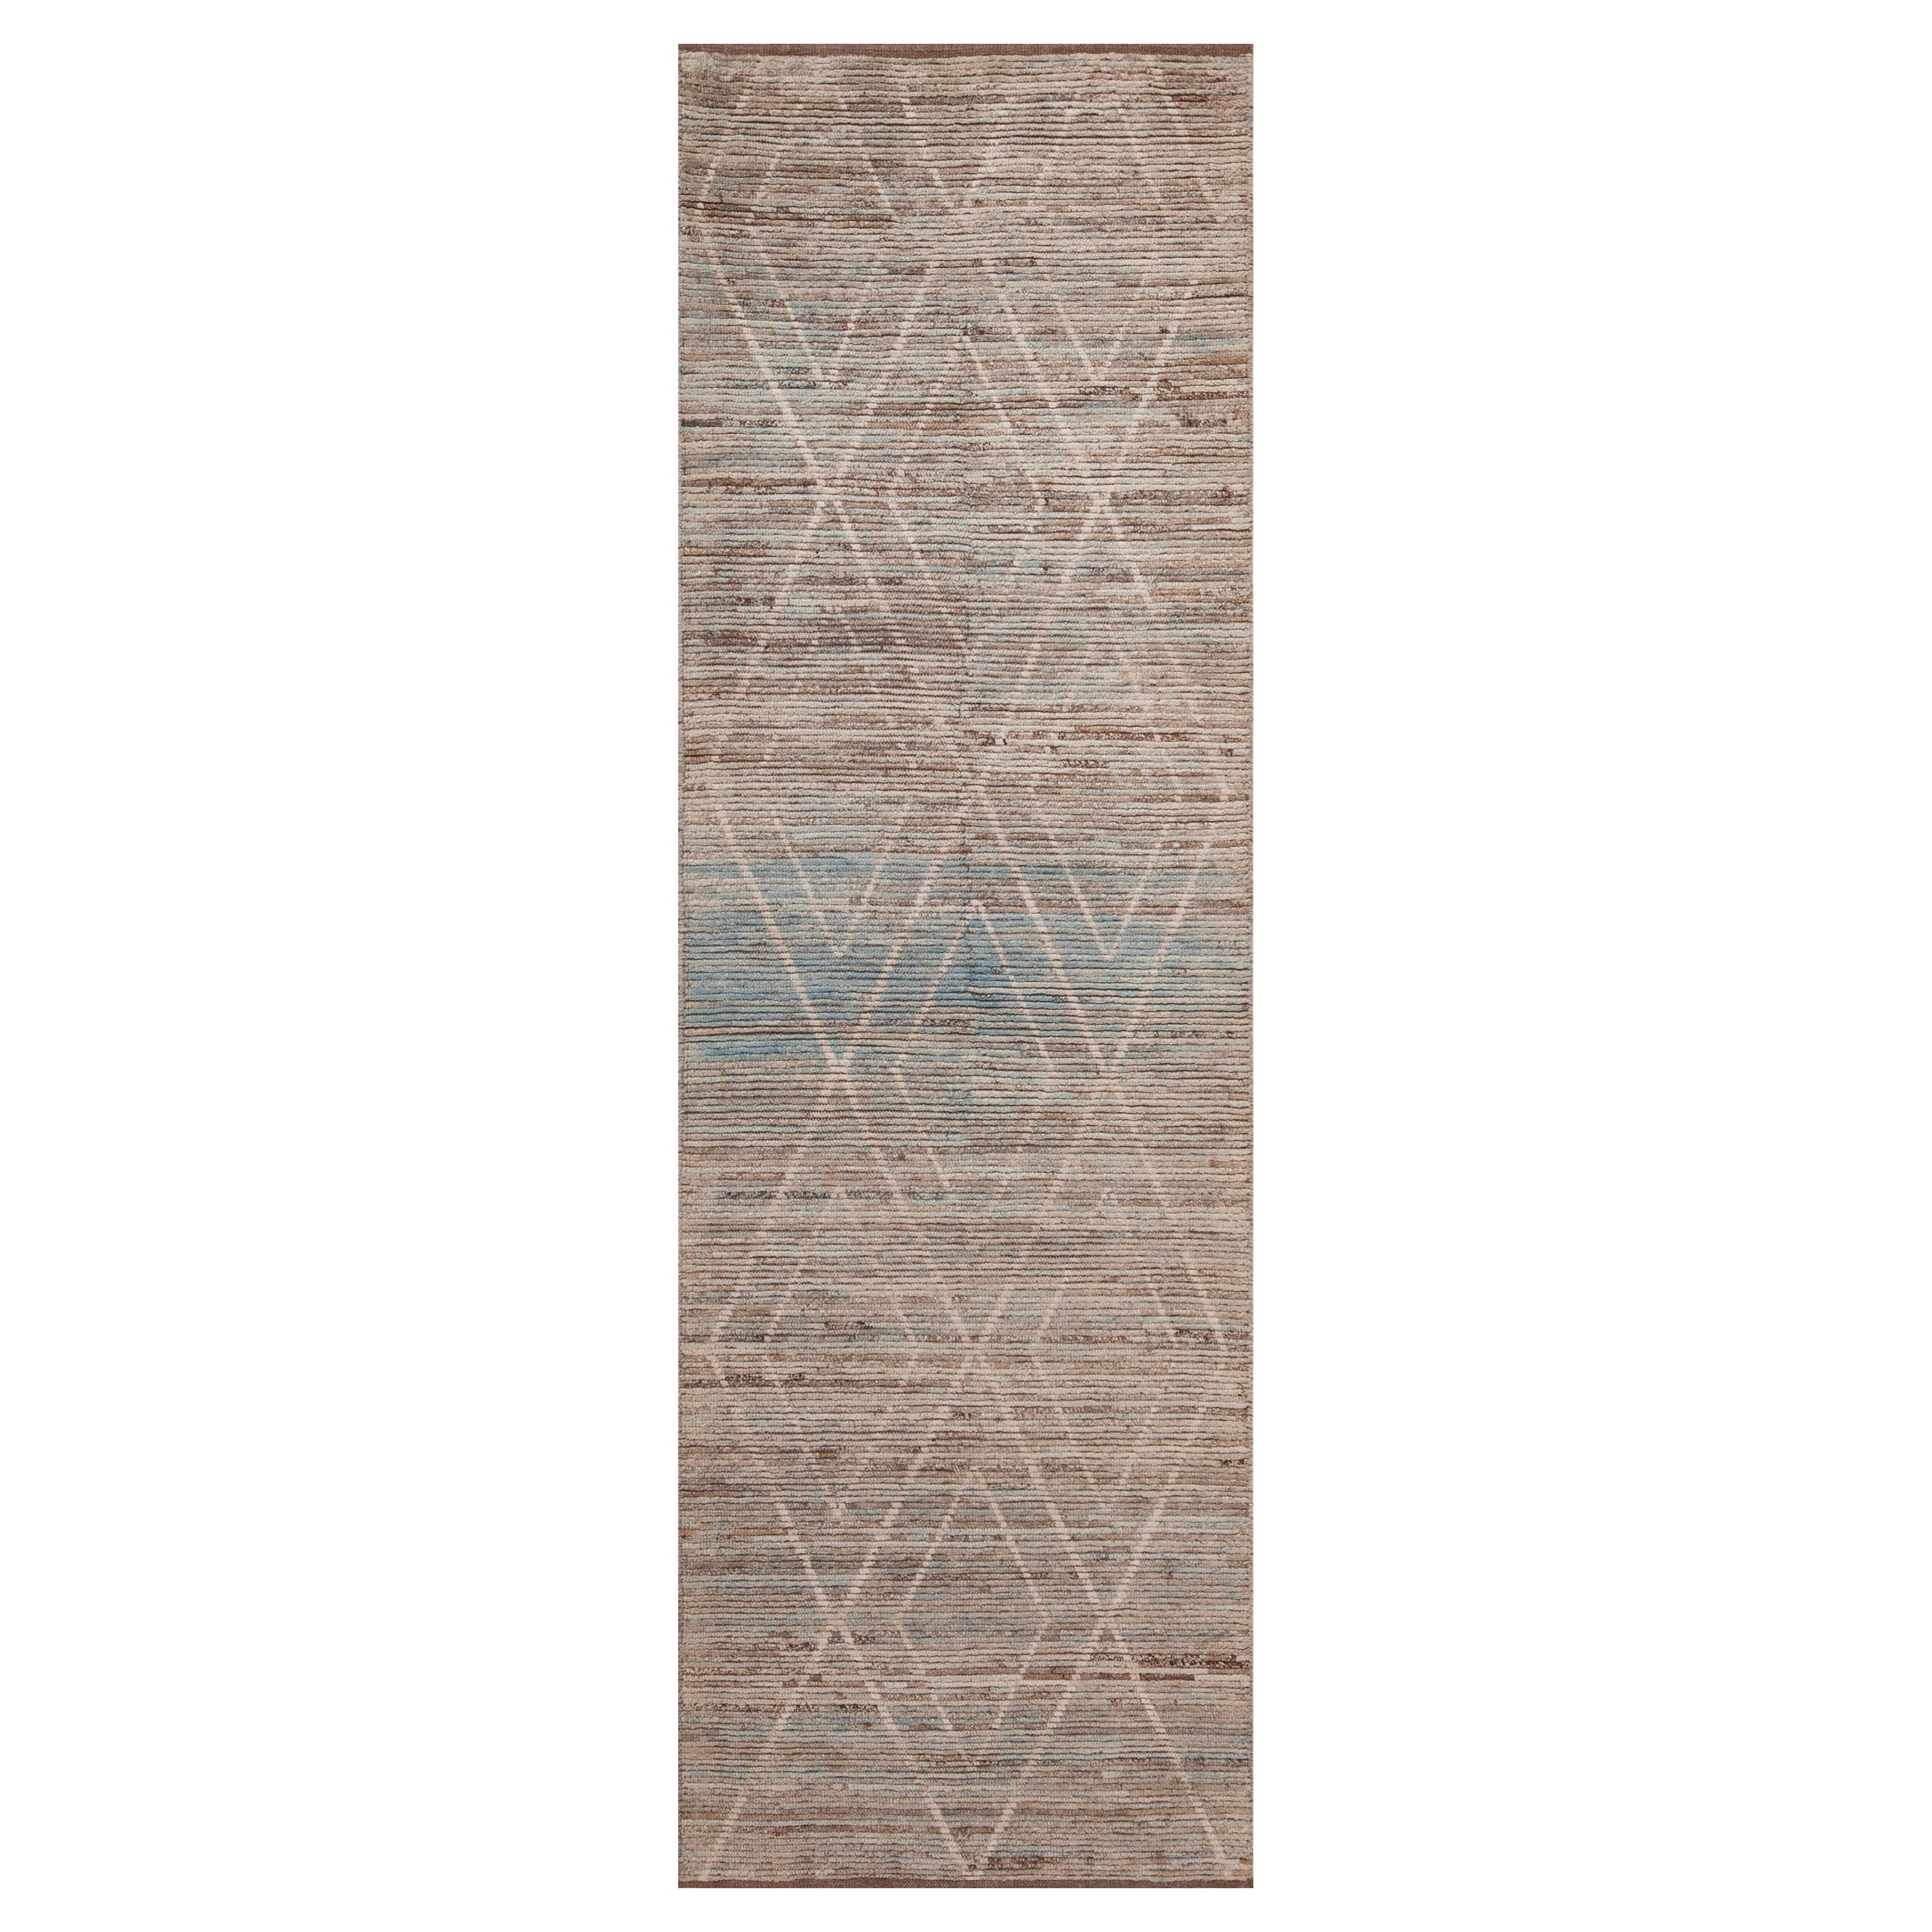 Nazmiyal Collection Tribal Geometric Beni Ourain Modern Runner Rug 3' x 9'8" For Sale